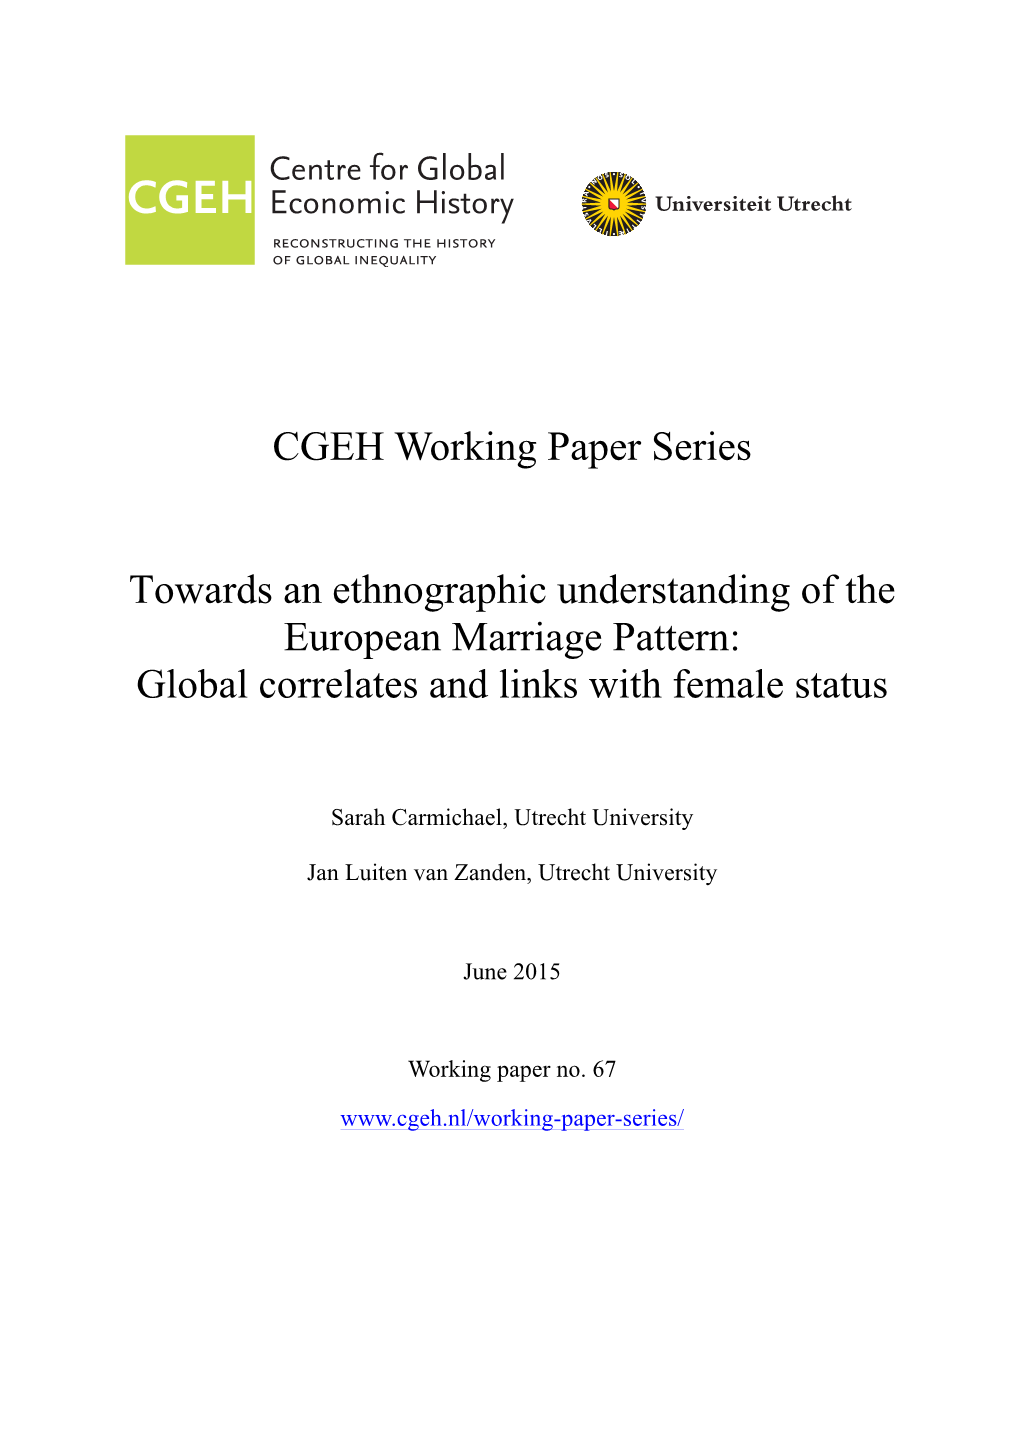 CGEH Working Paper Series Towards an Ethnographic Understanding Of